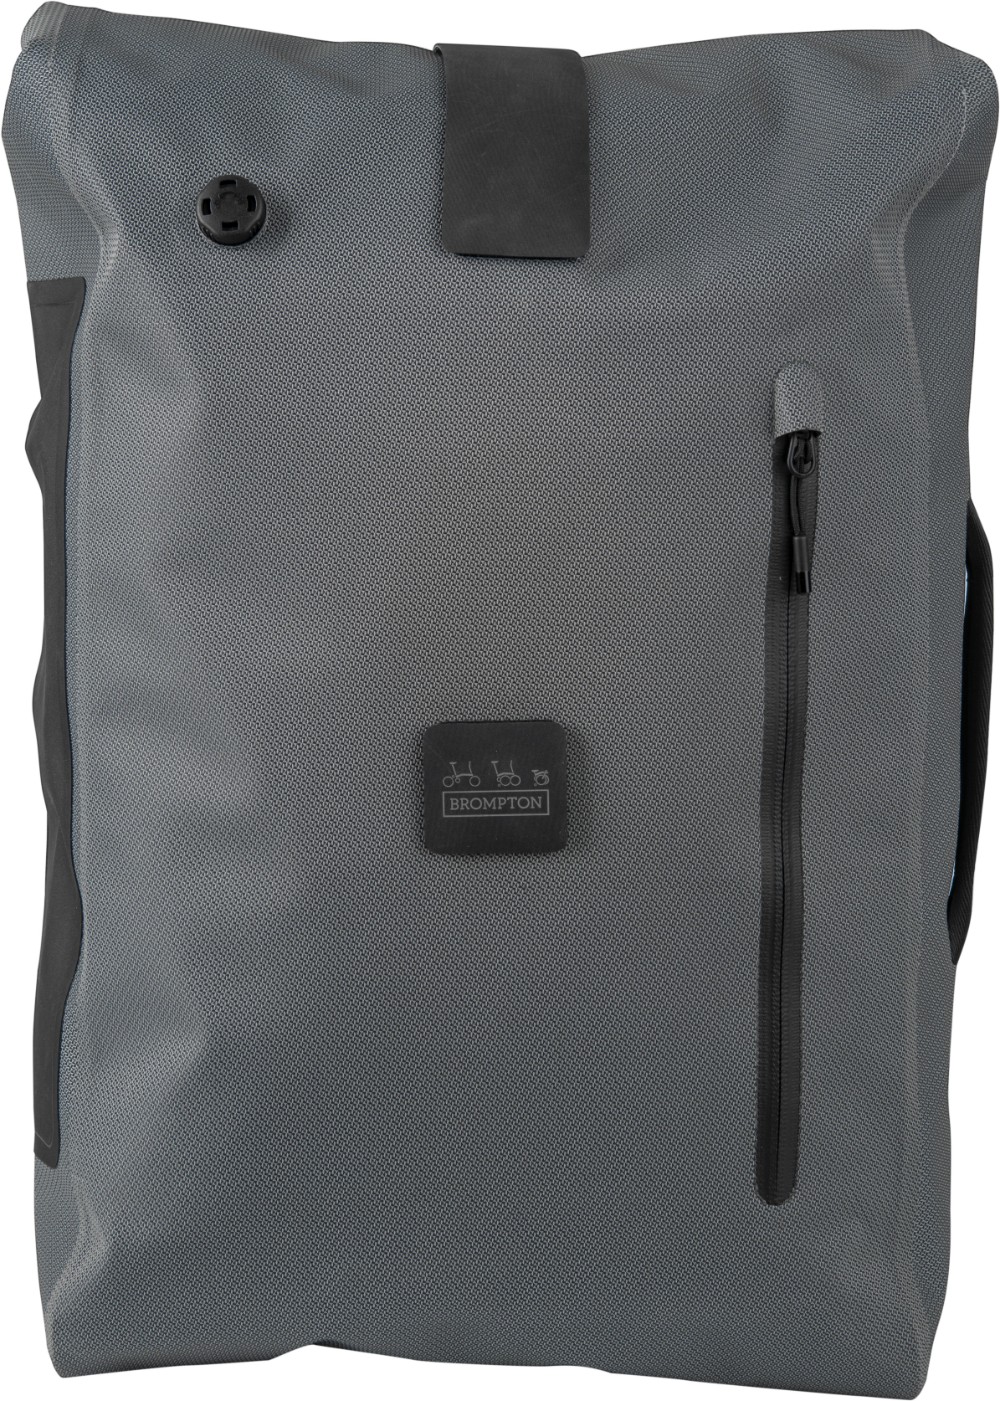 Borough Waterproof Backpack image 0